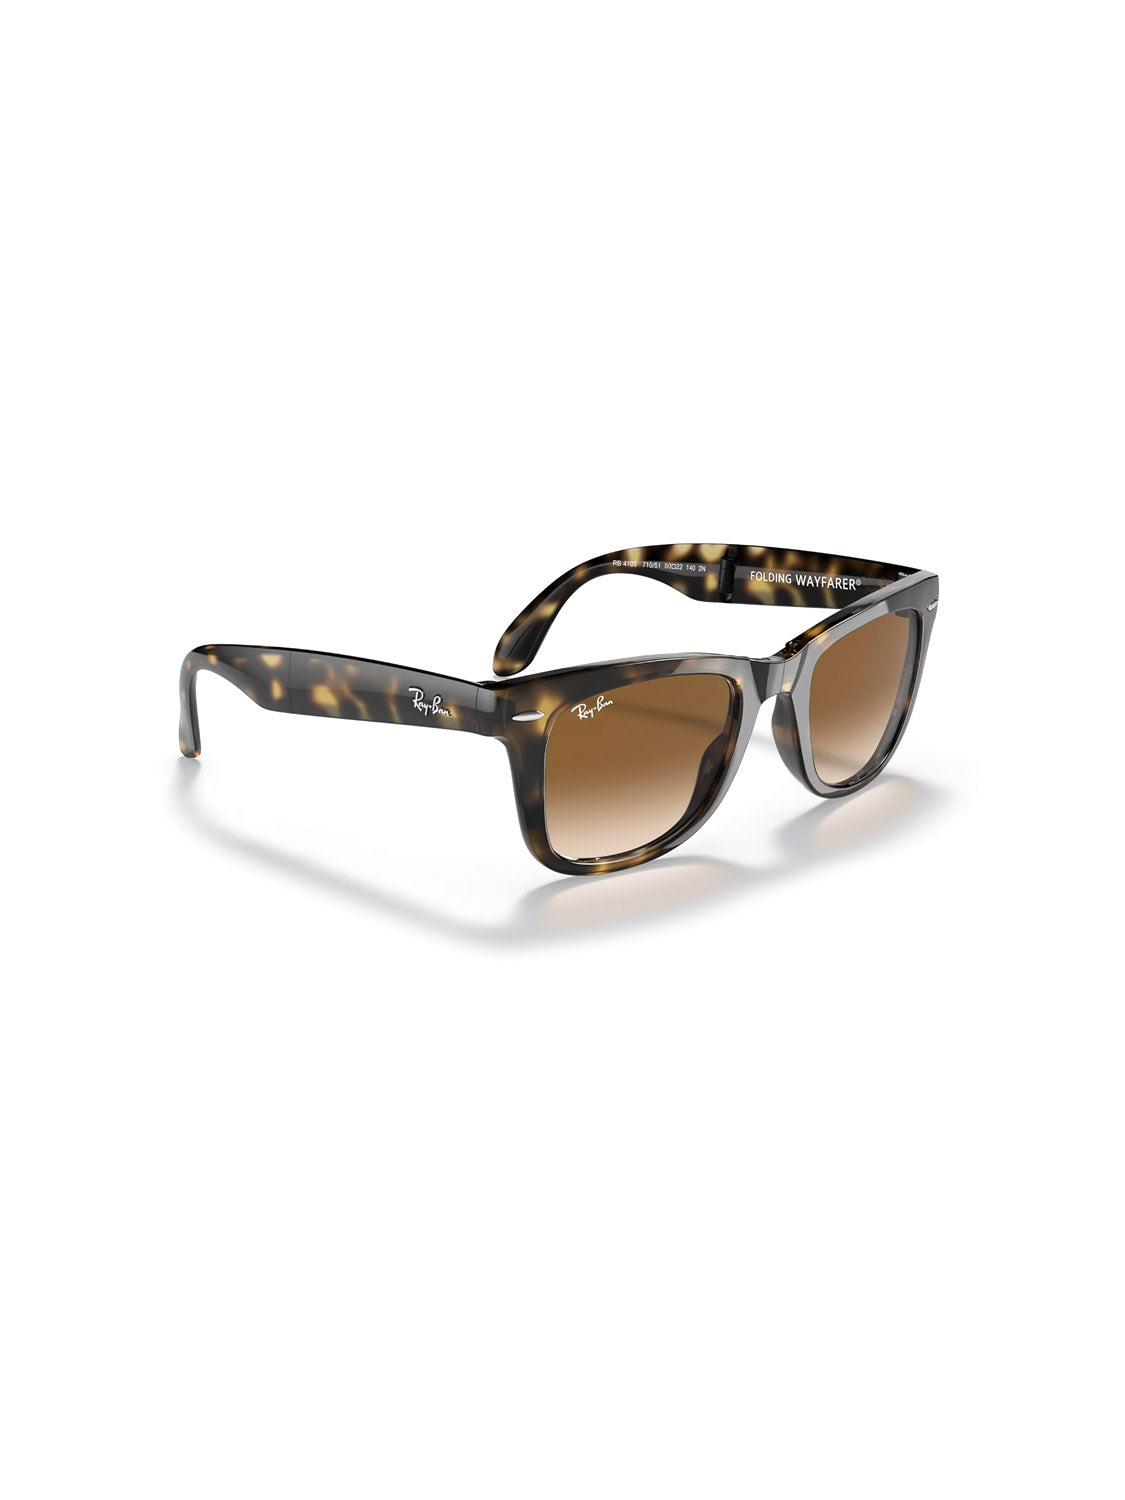 Ray Ban - RB4105 Wayfarer Folding Classic Sunglasses